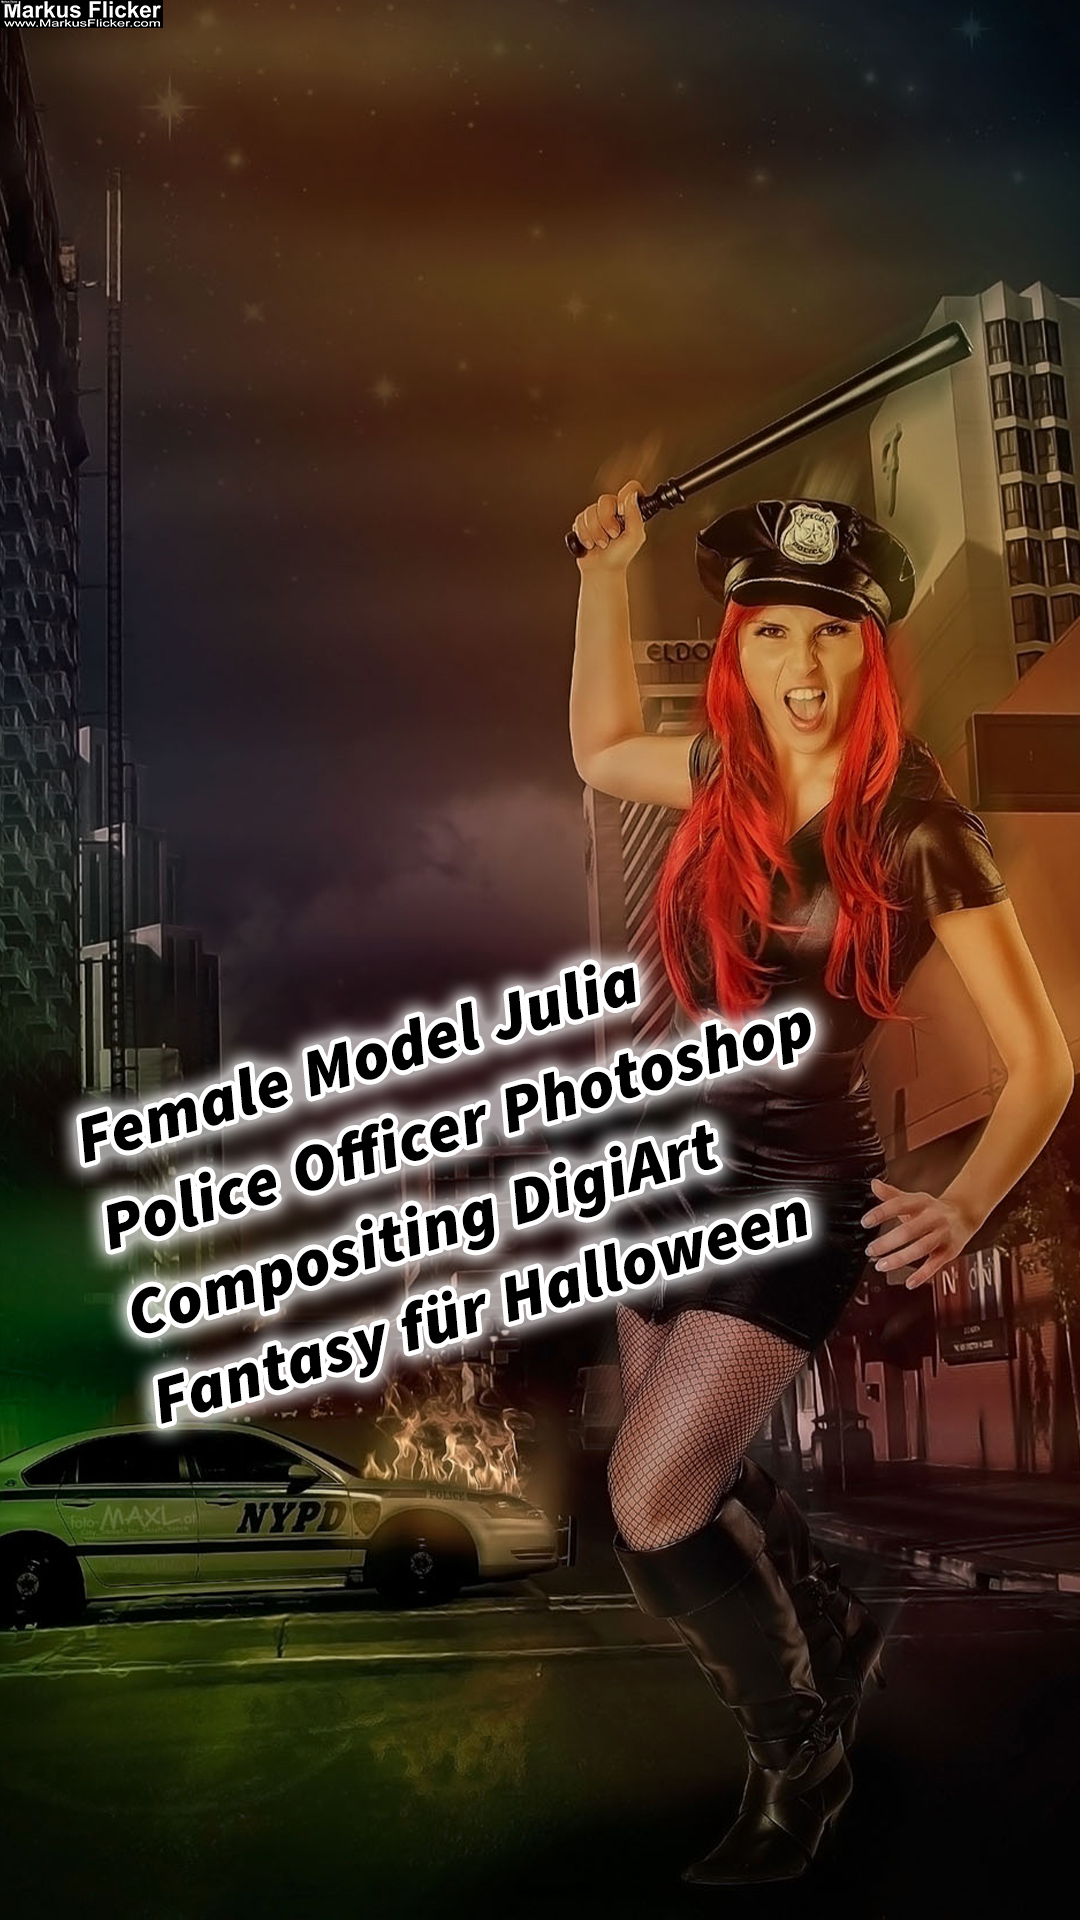 Female Model Julia Police Officer Photoshop Compositing DigiArt Fantasy für Halloween